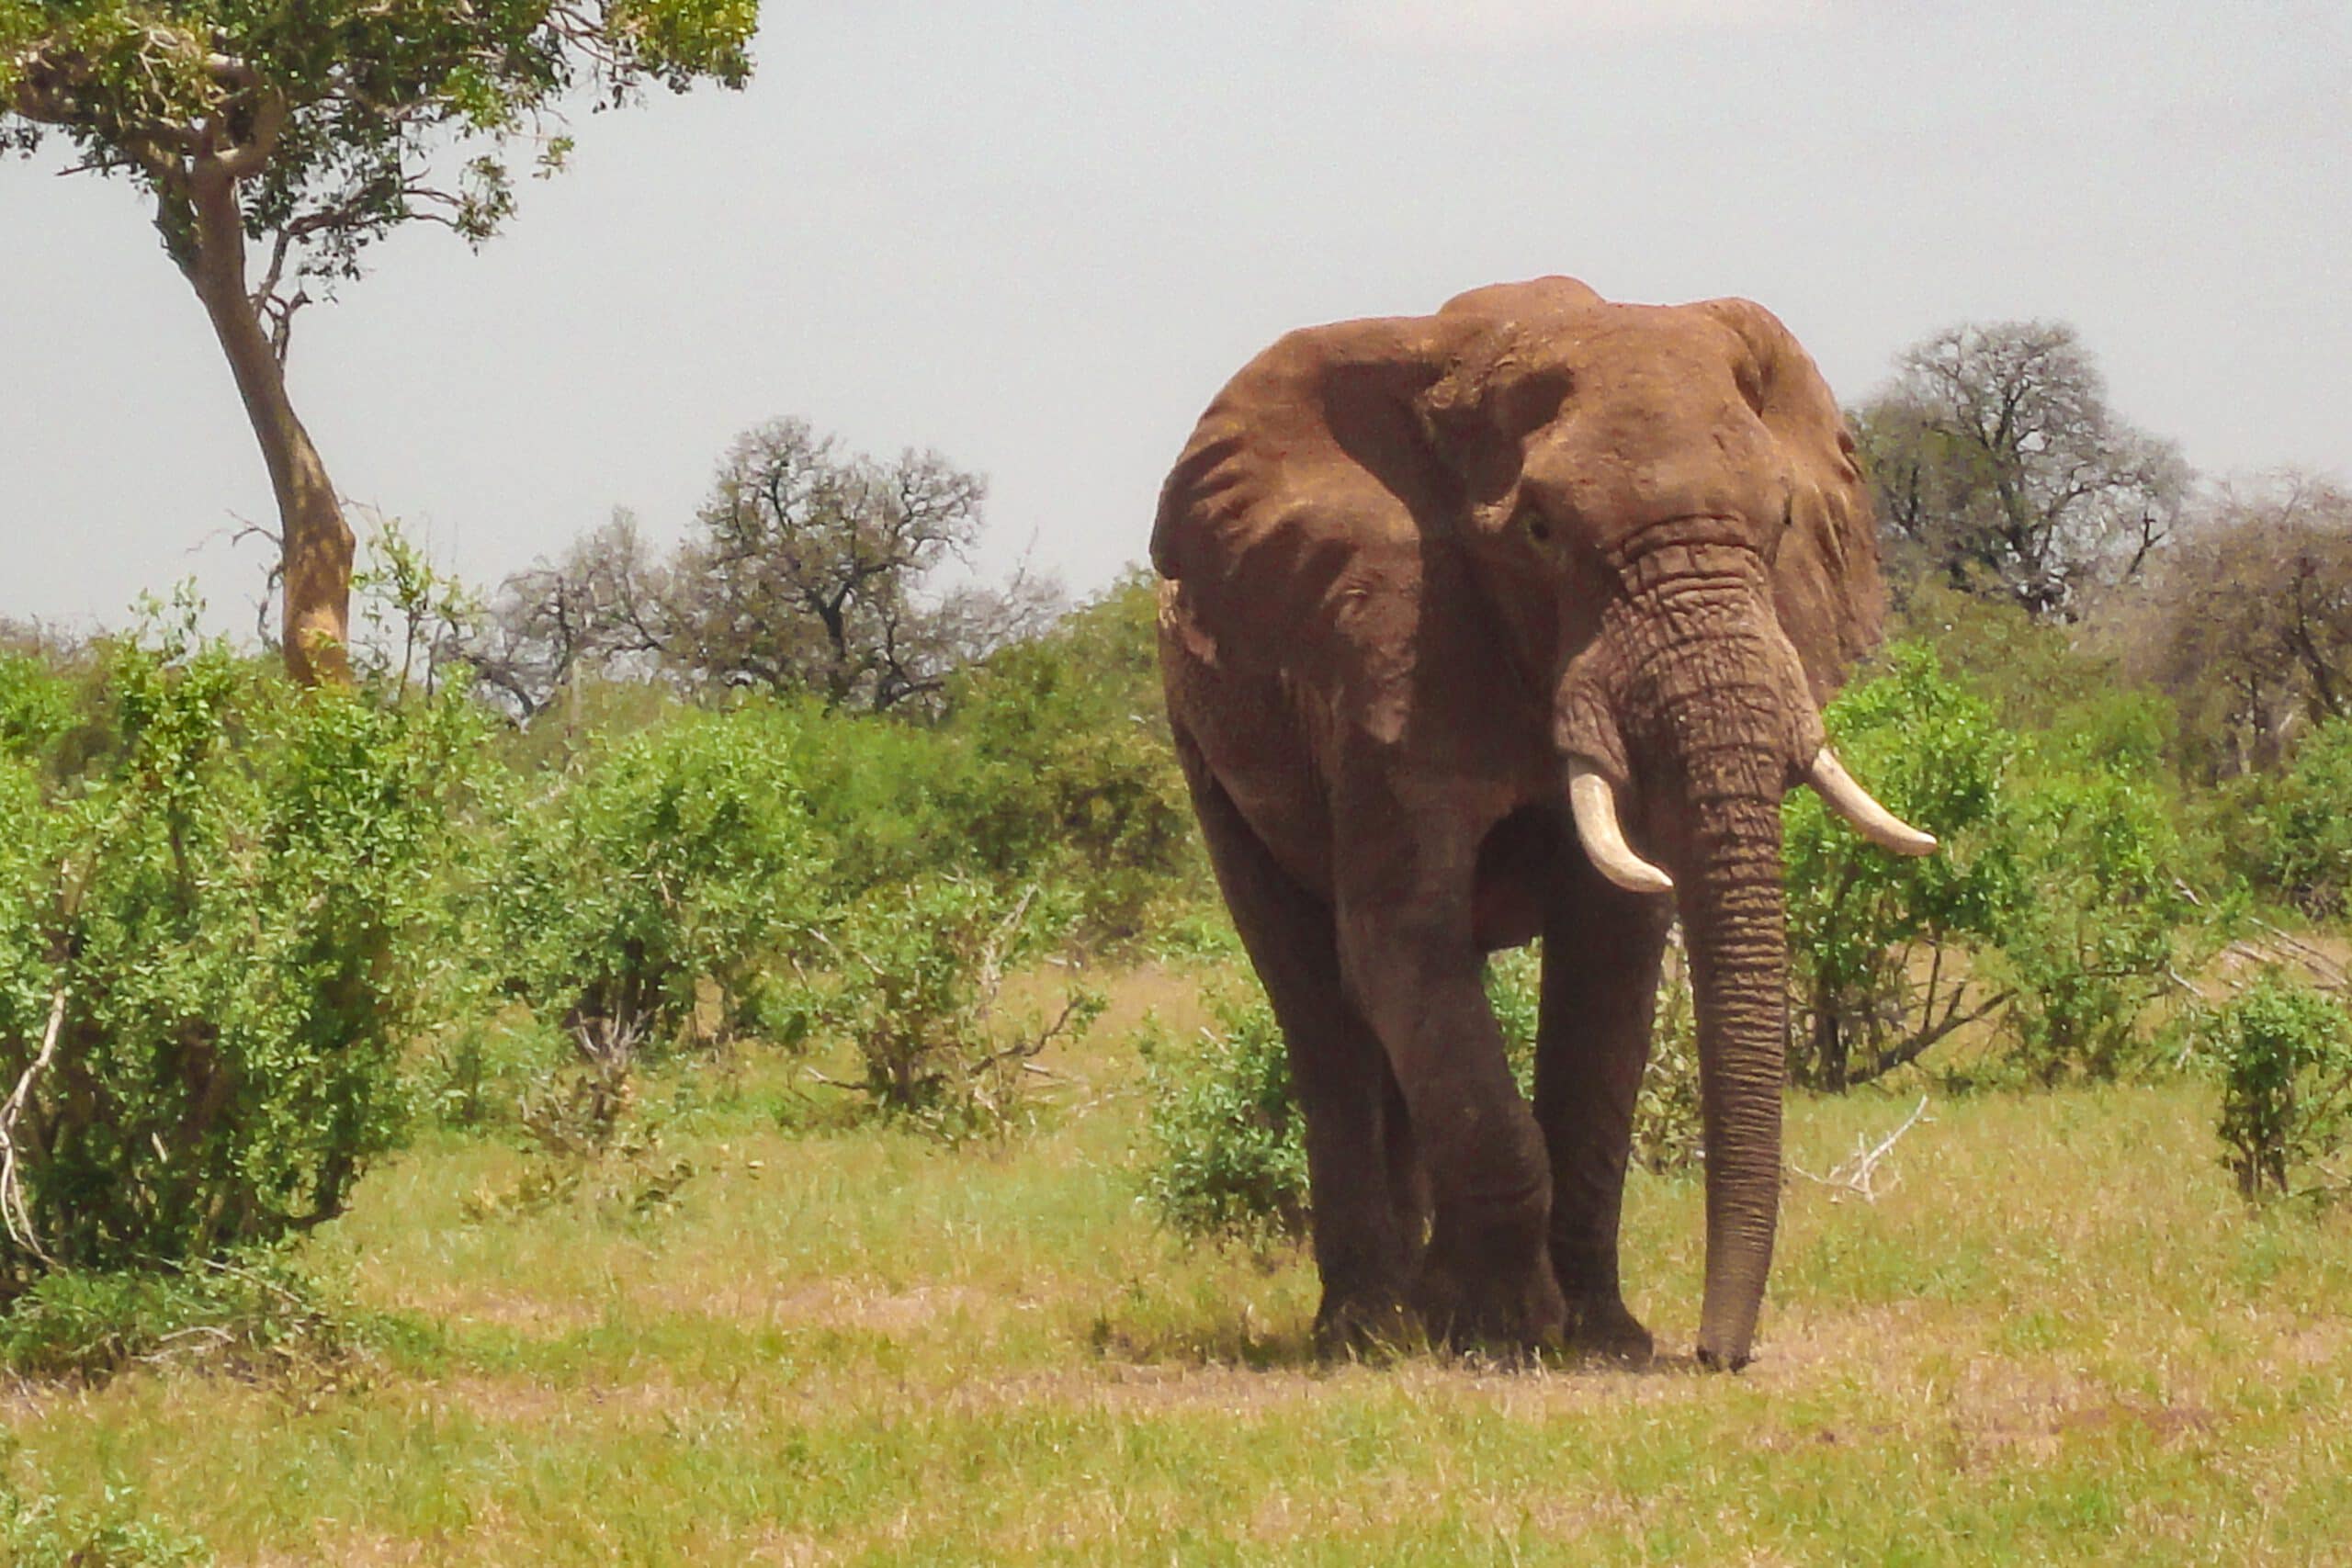 elephant on the savanna in kenya 2022 11 16 19 38 43 utc scaled